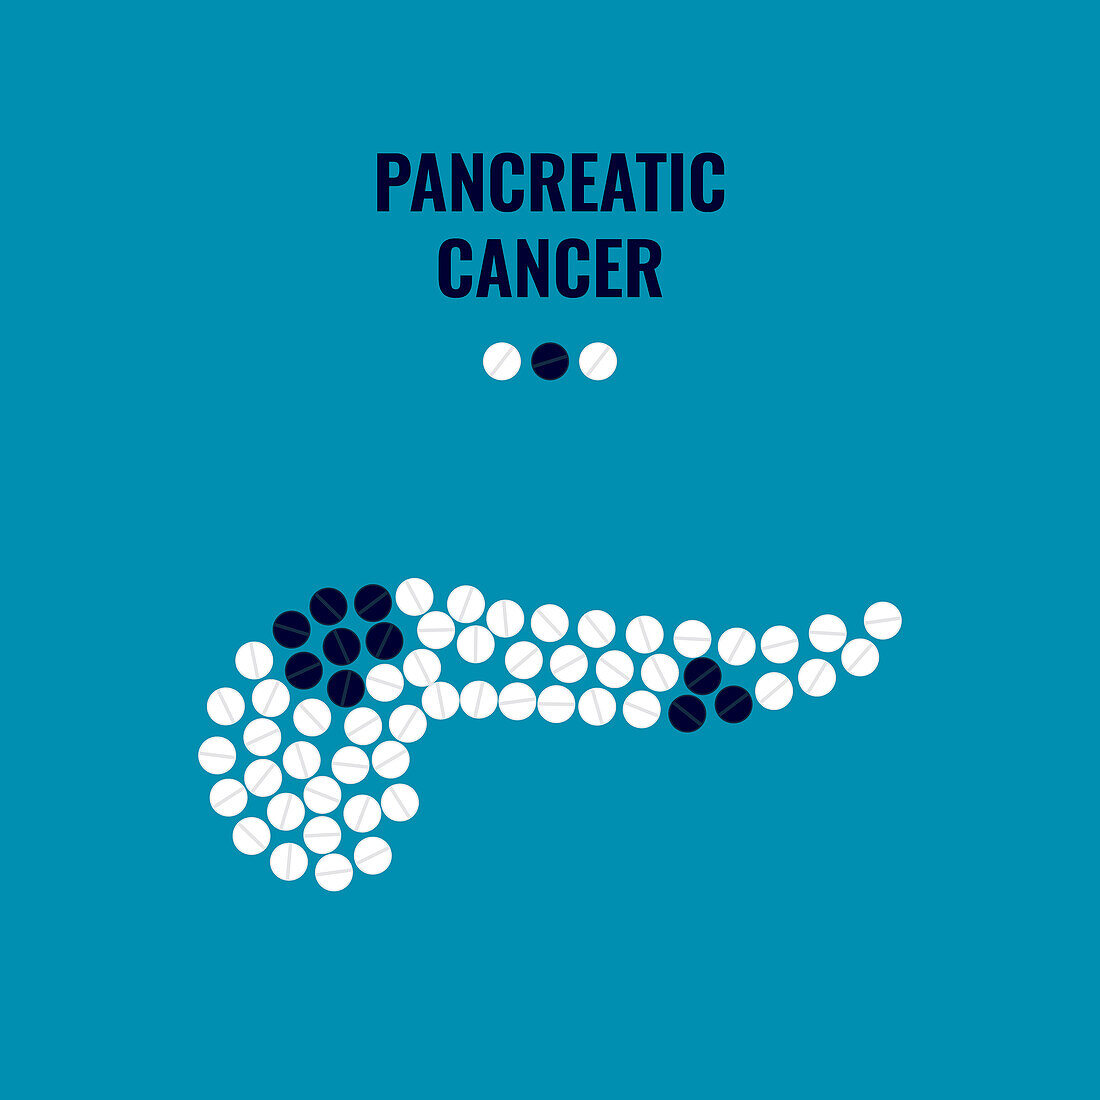 Pancreatic cancer, conceptual illustration